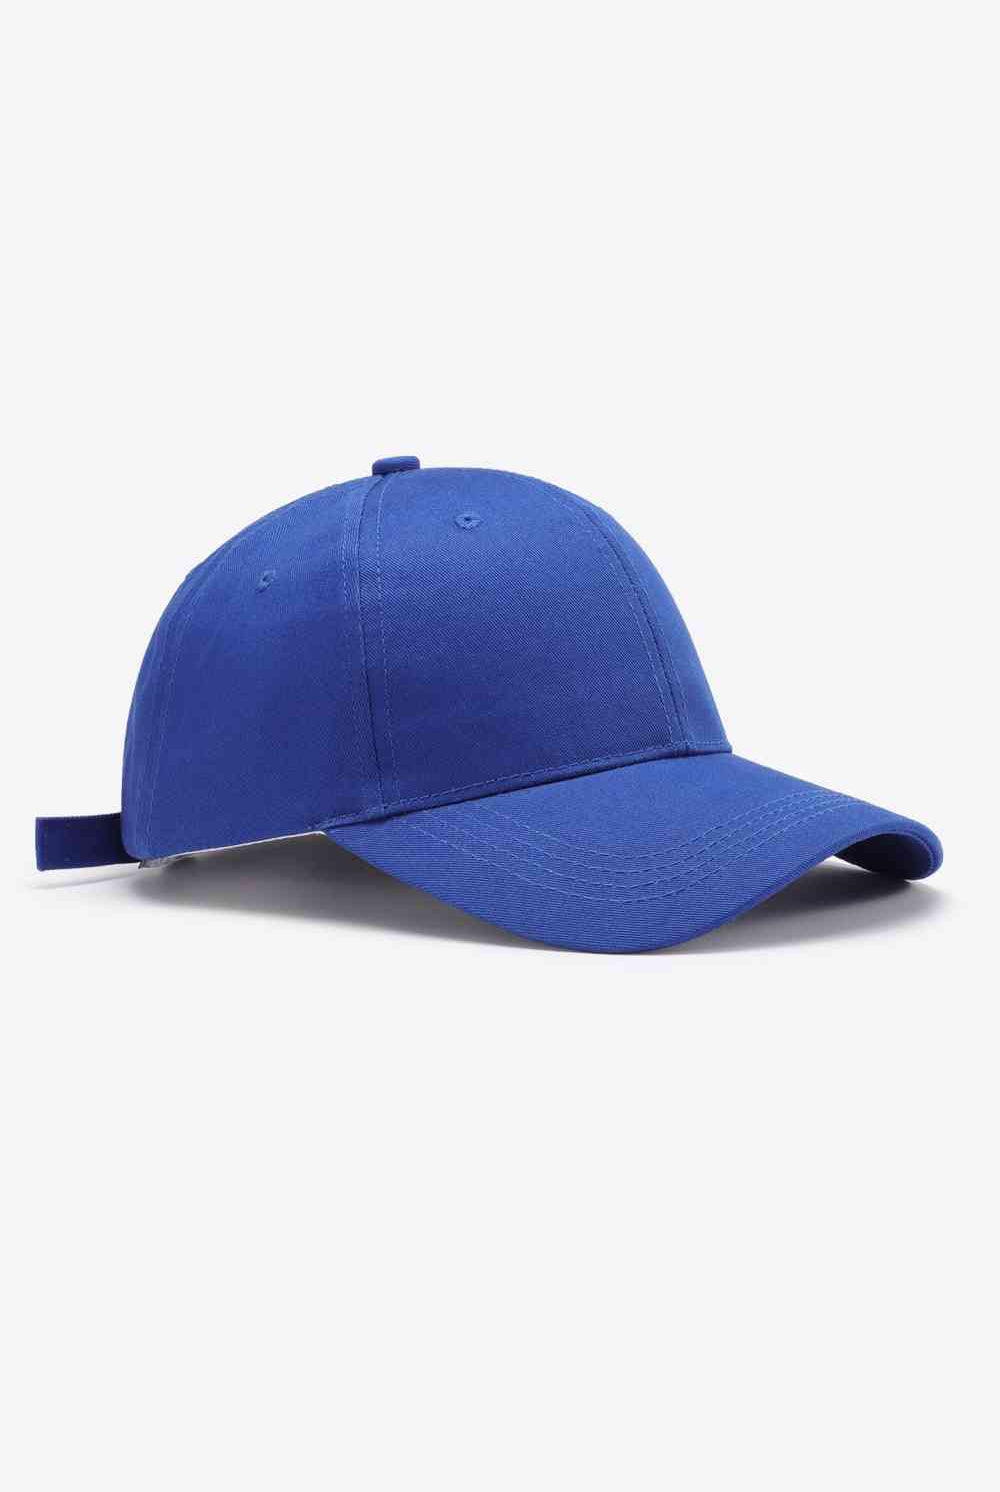 Dark Slate Blue Plain Adjustable Cotton Baseball Cap Gifts